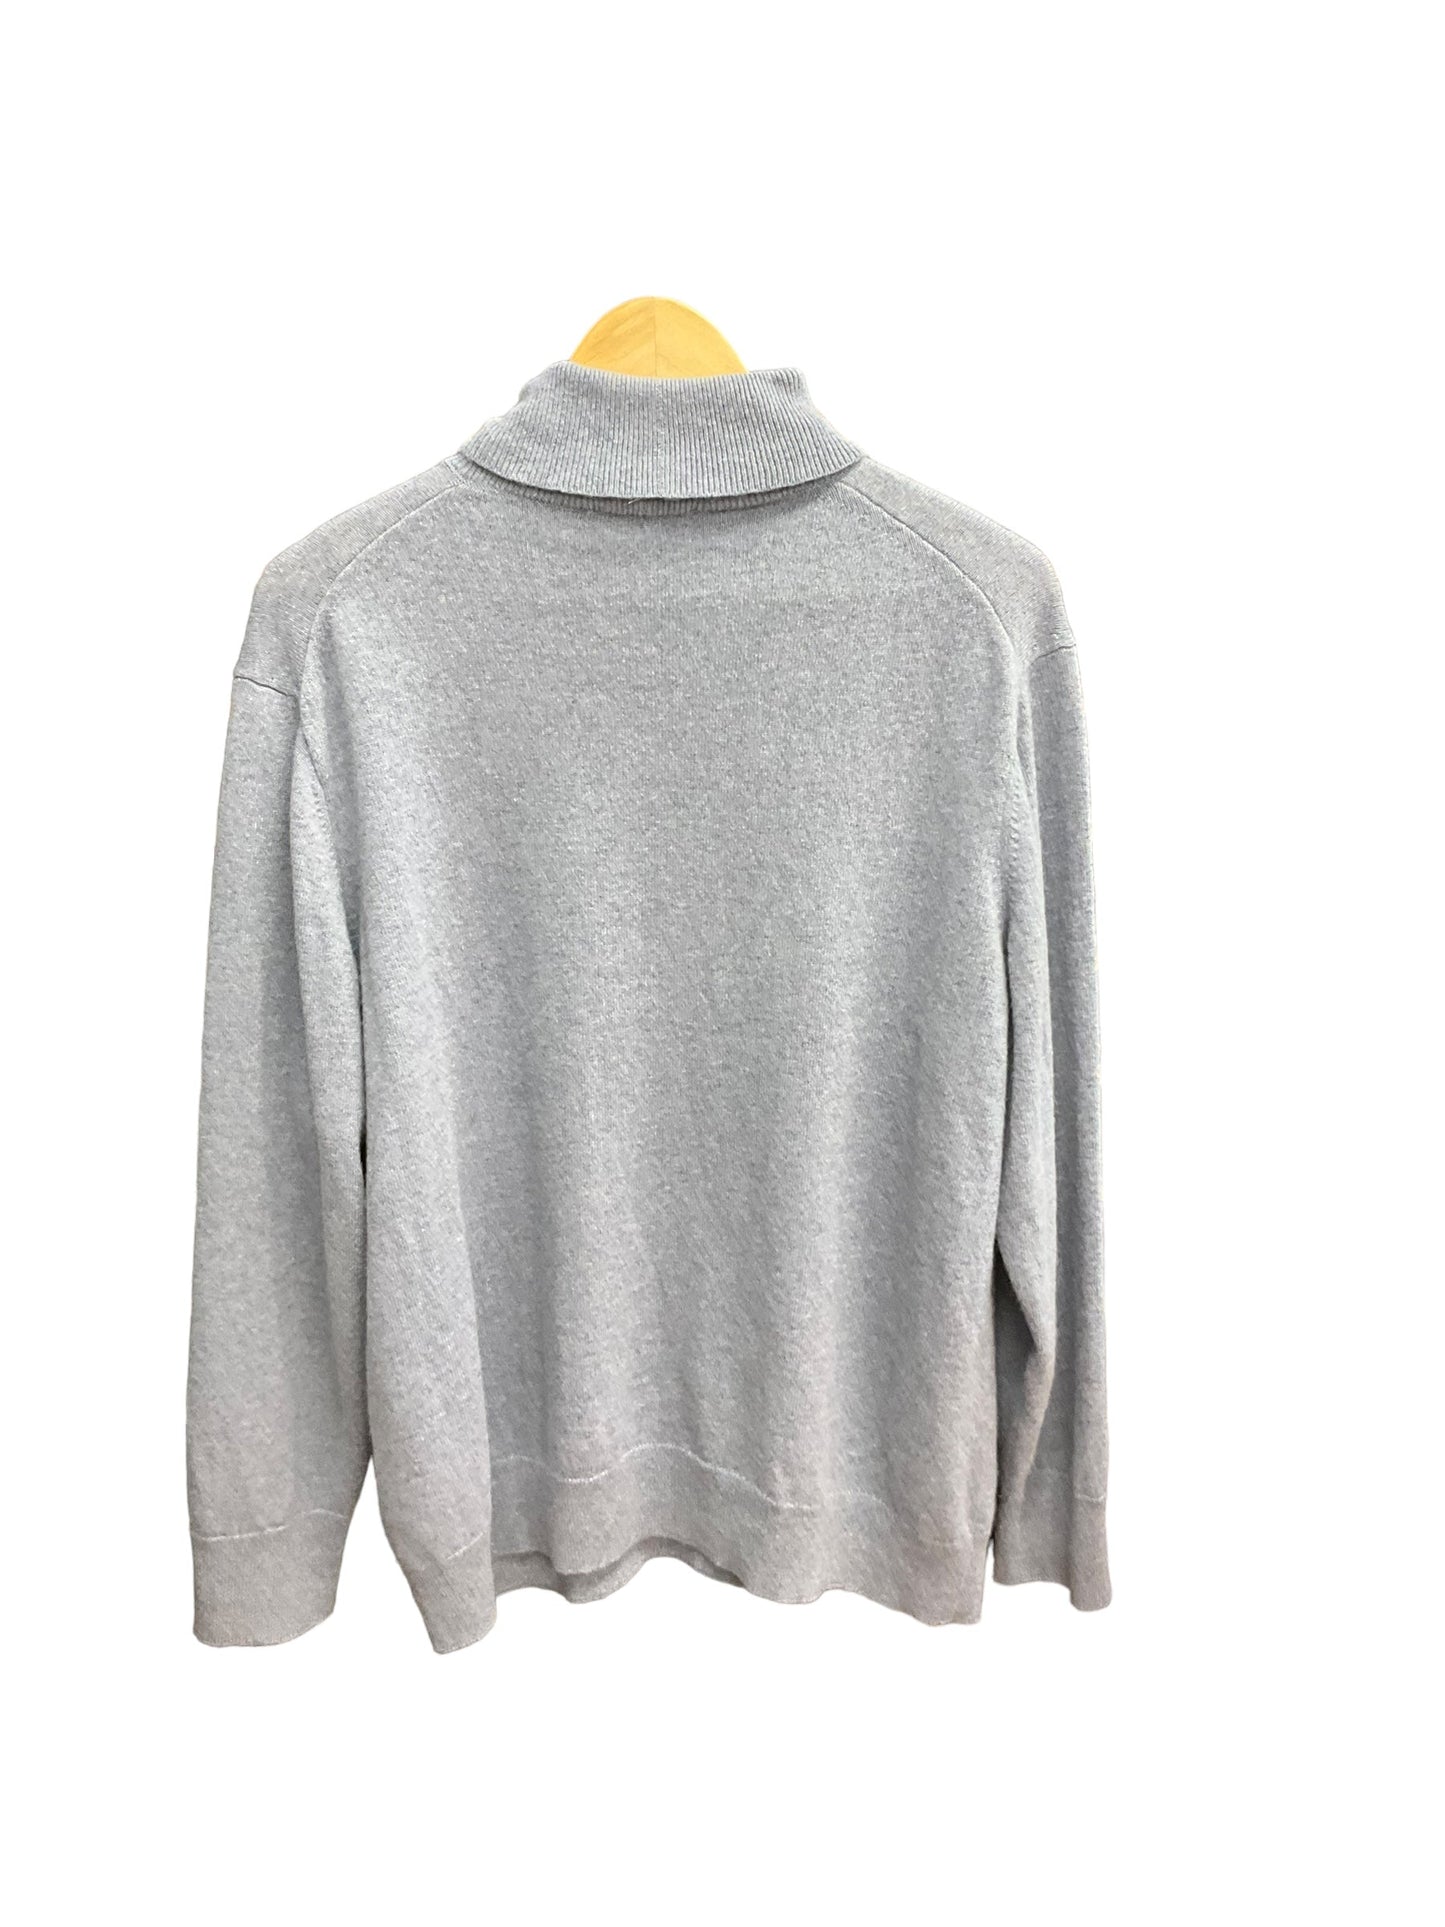 Blue Sweater Cashmere Lafayette 148, Size 1x